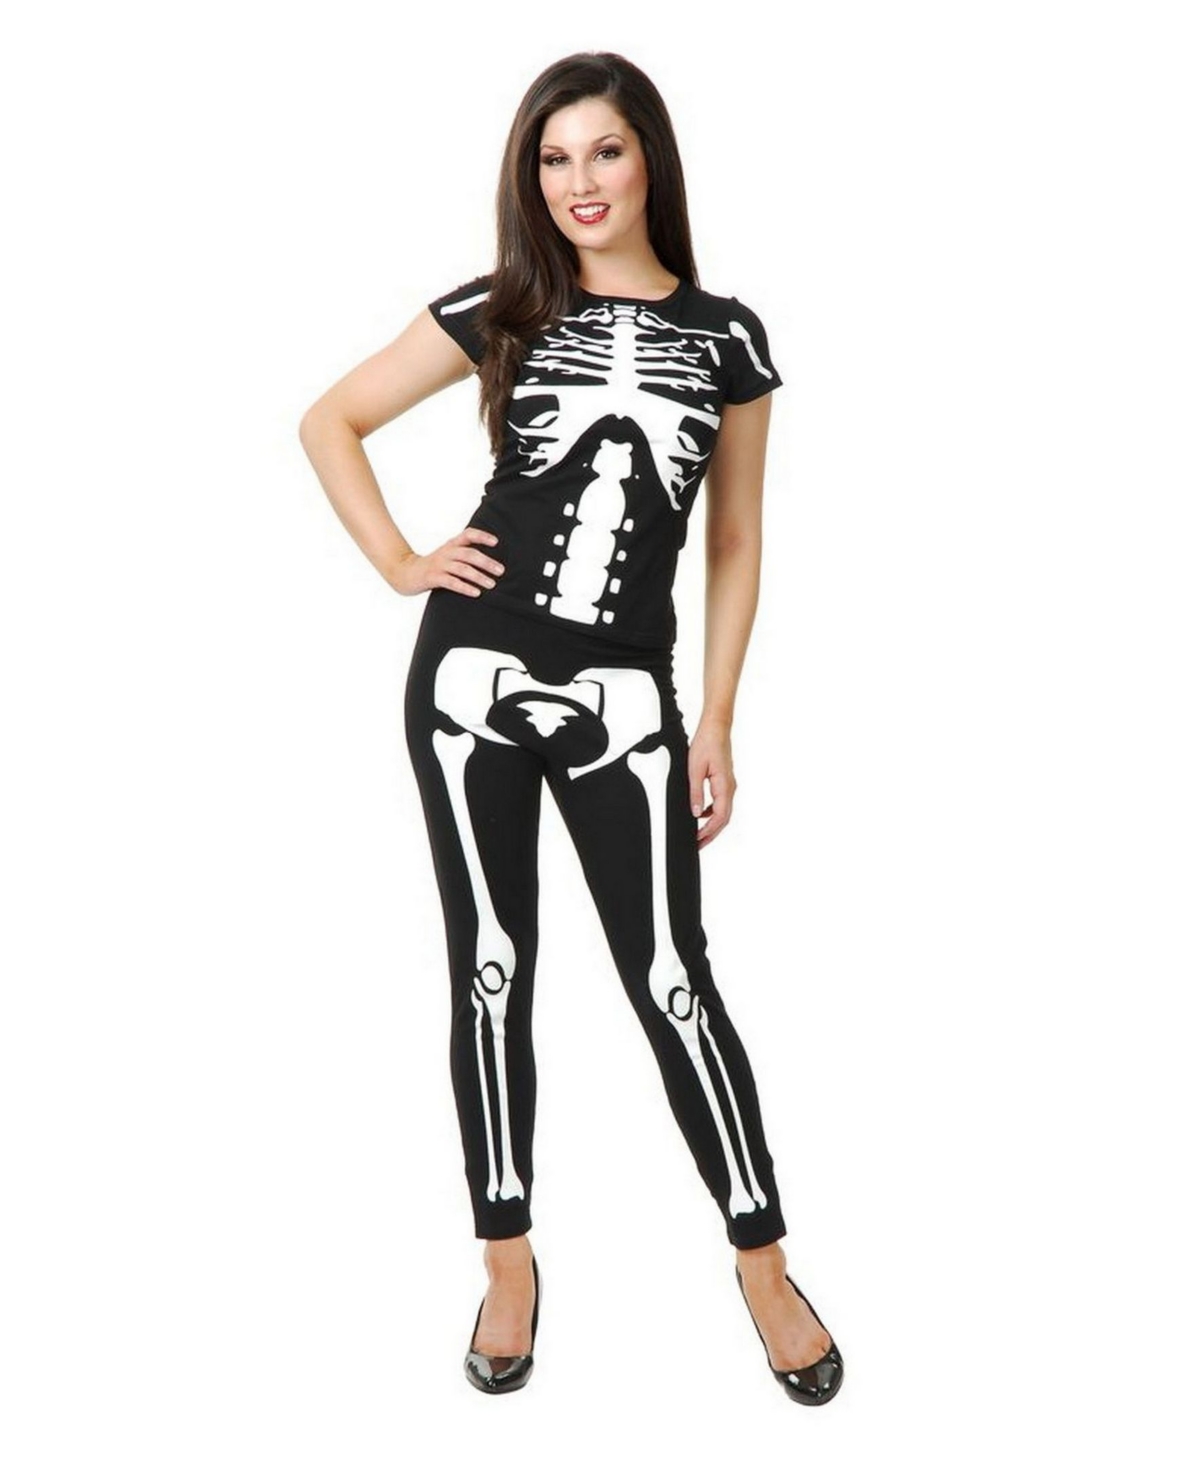 BuySeasons Women's Skeleton Adult Costume